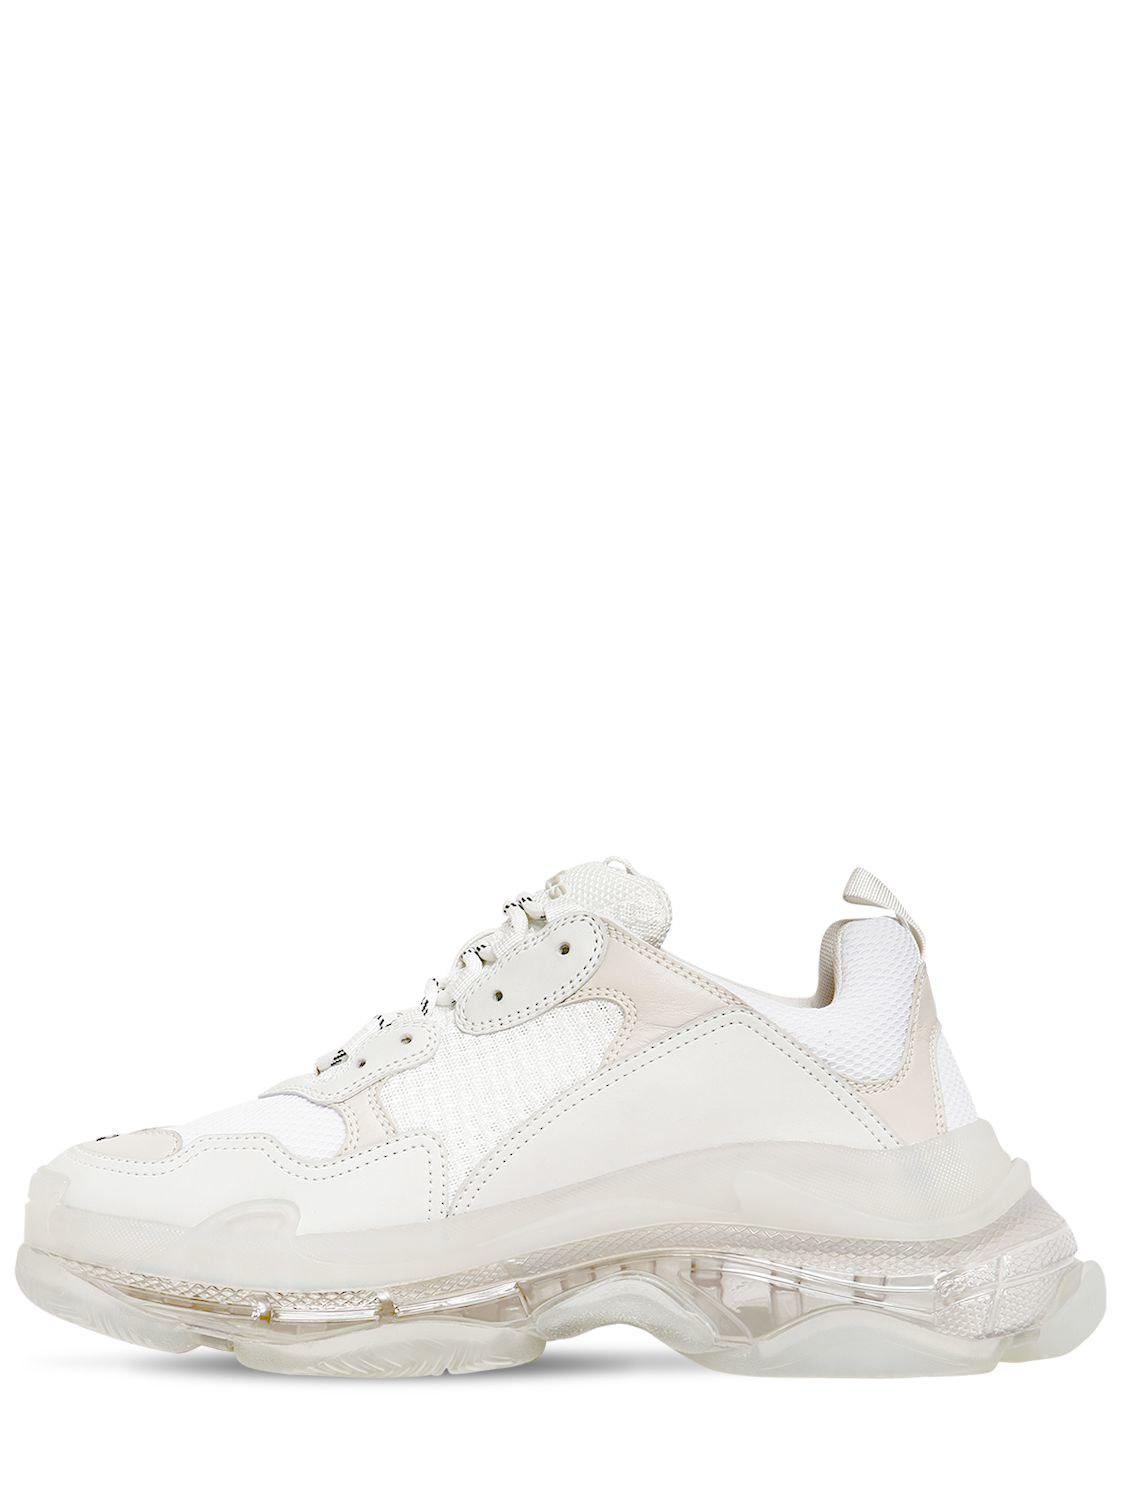 Balenciaga Leather Triple S Bubble Sole Sneakers in White for Men - Lyst